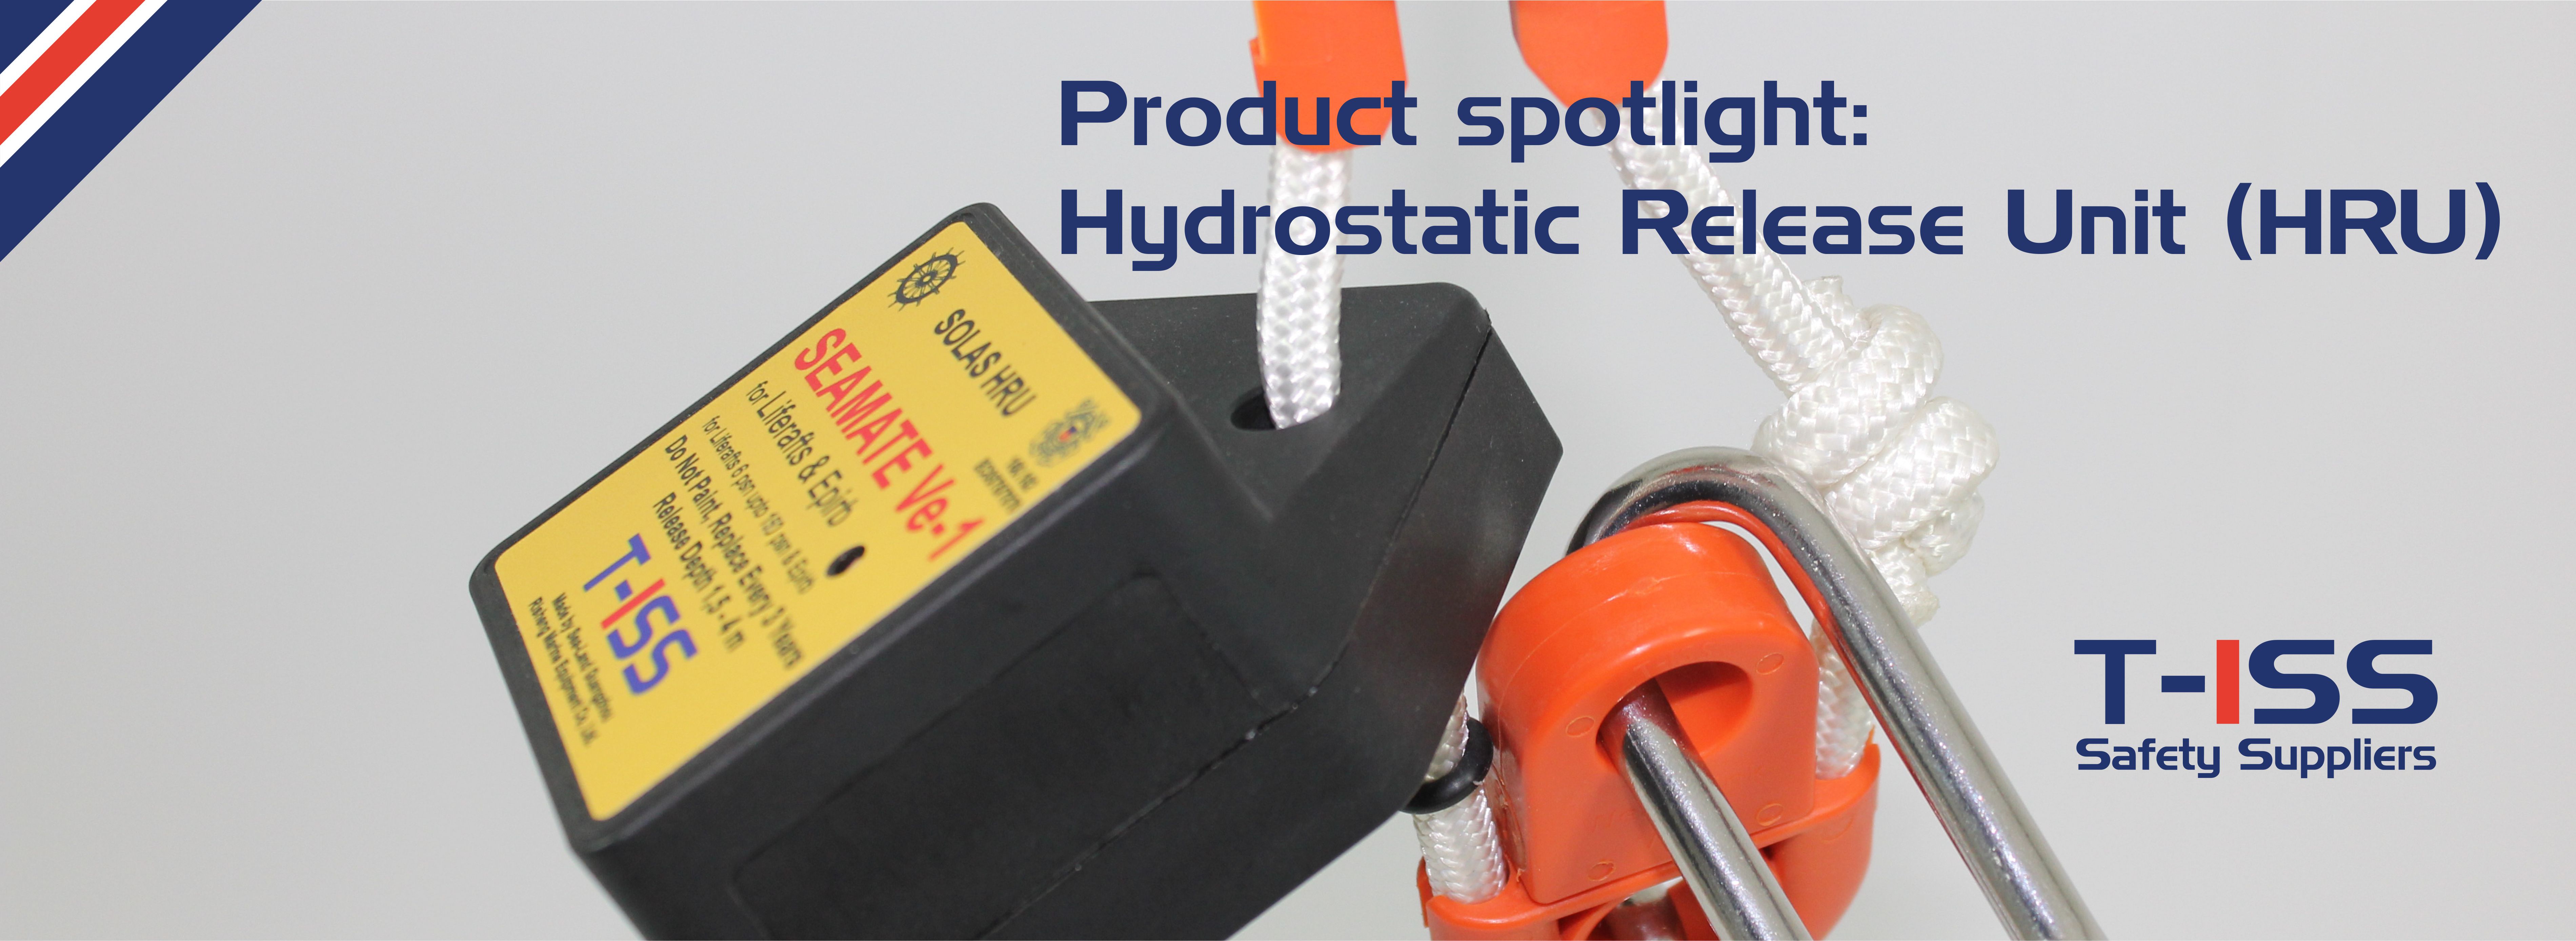 Product spotlight: Hydrostatic Release Unit (HRU)